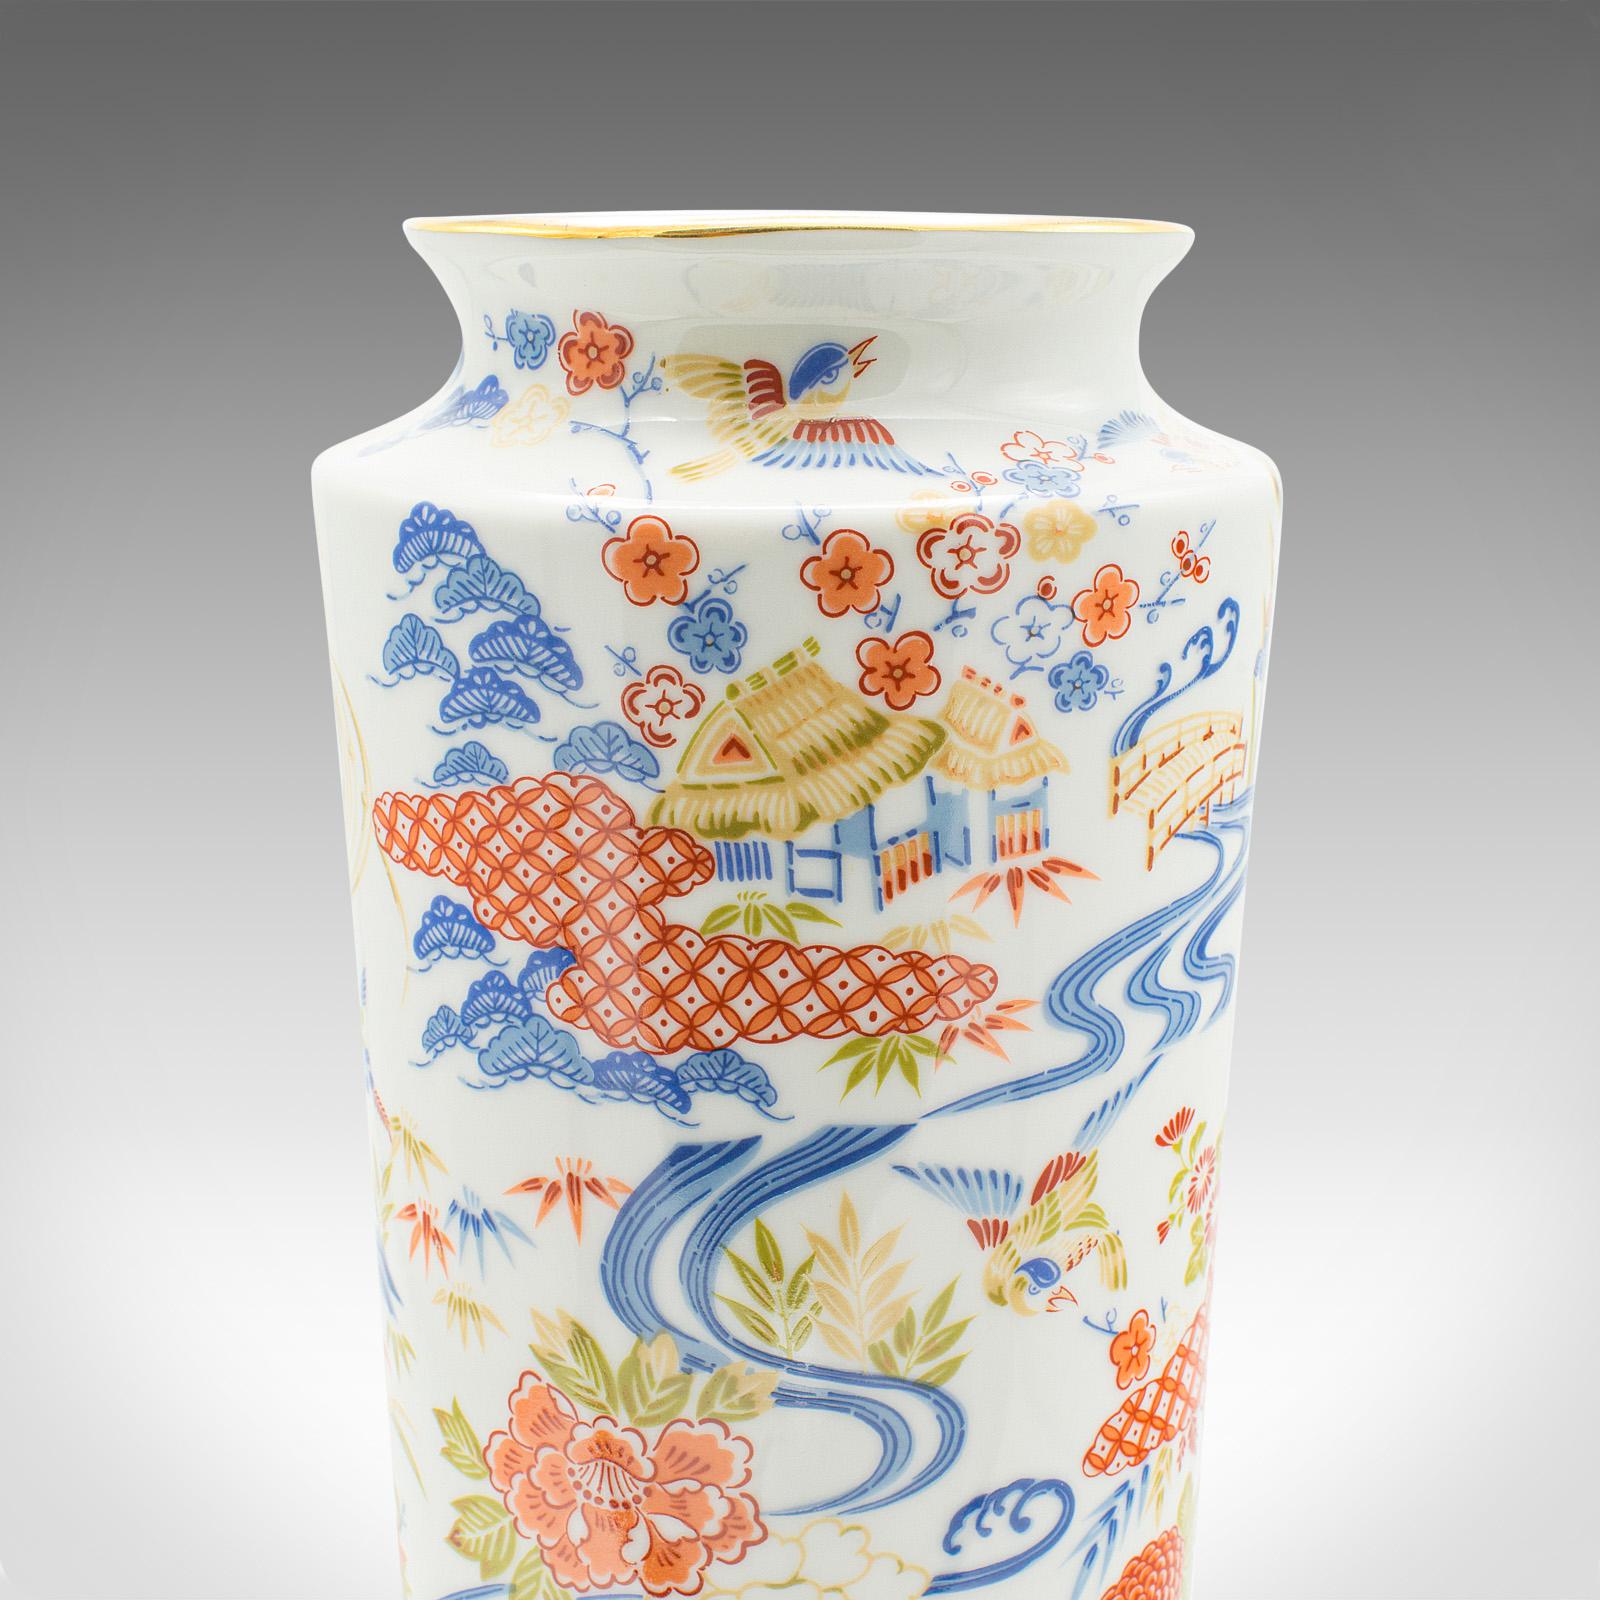 Vintage Decorative Flower Vase, Chinese, Ceramic, Stem Sleeve, Art Deco Revival For Sale 3